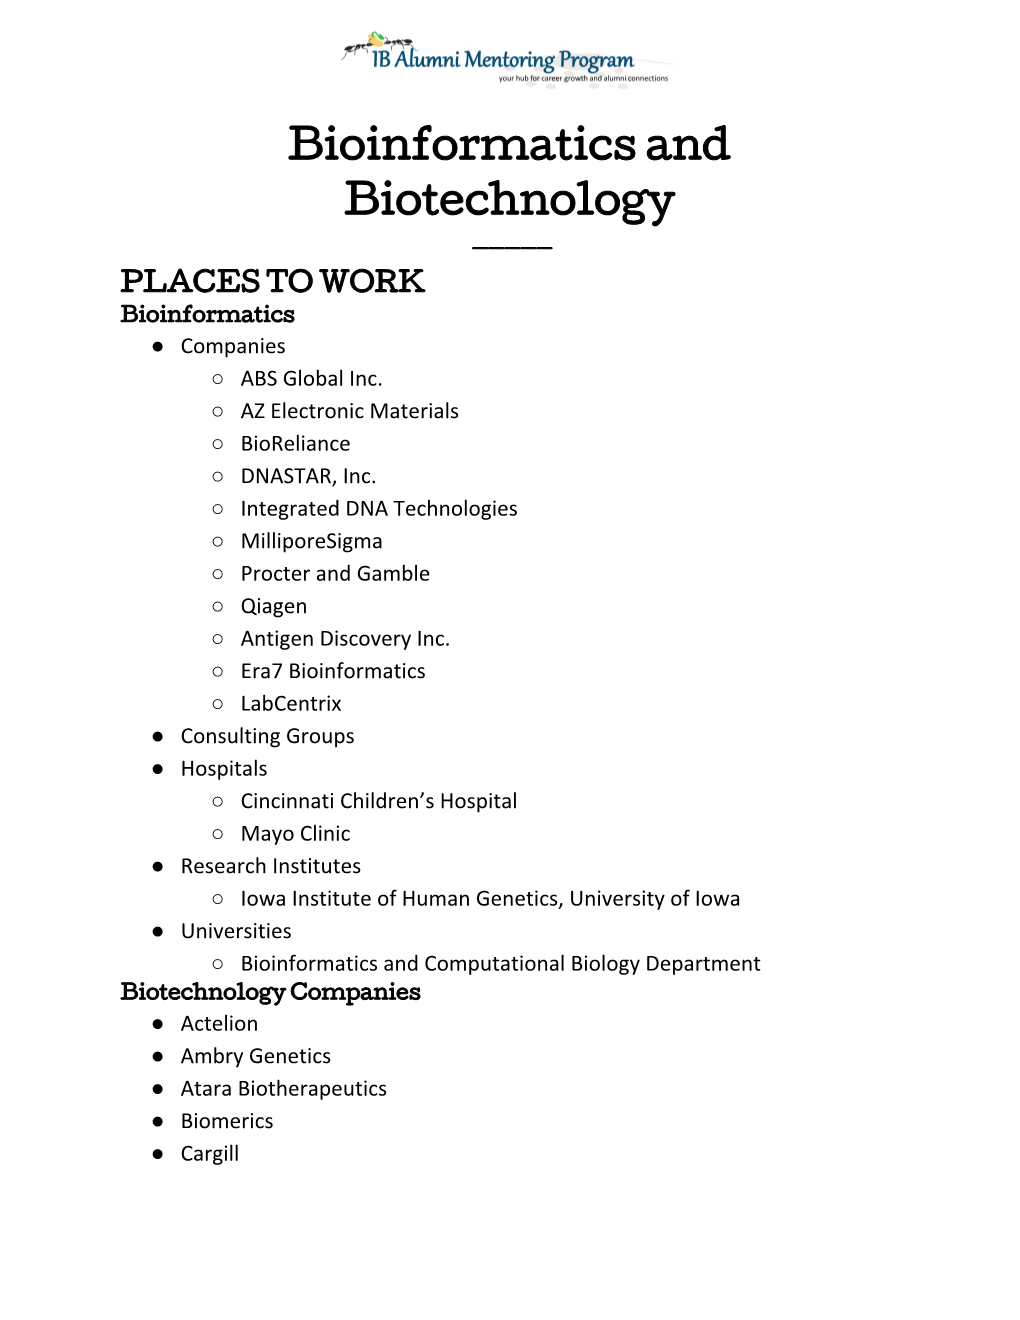 Bioinformatics and Biotechnology